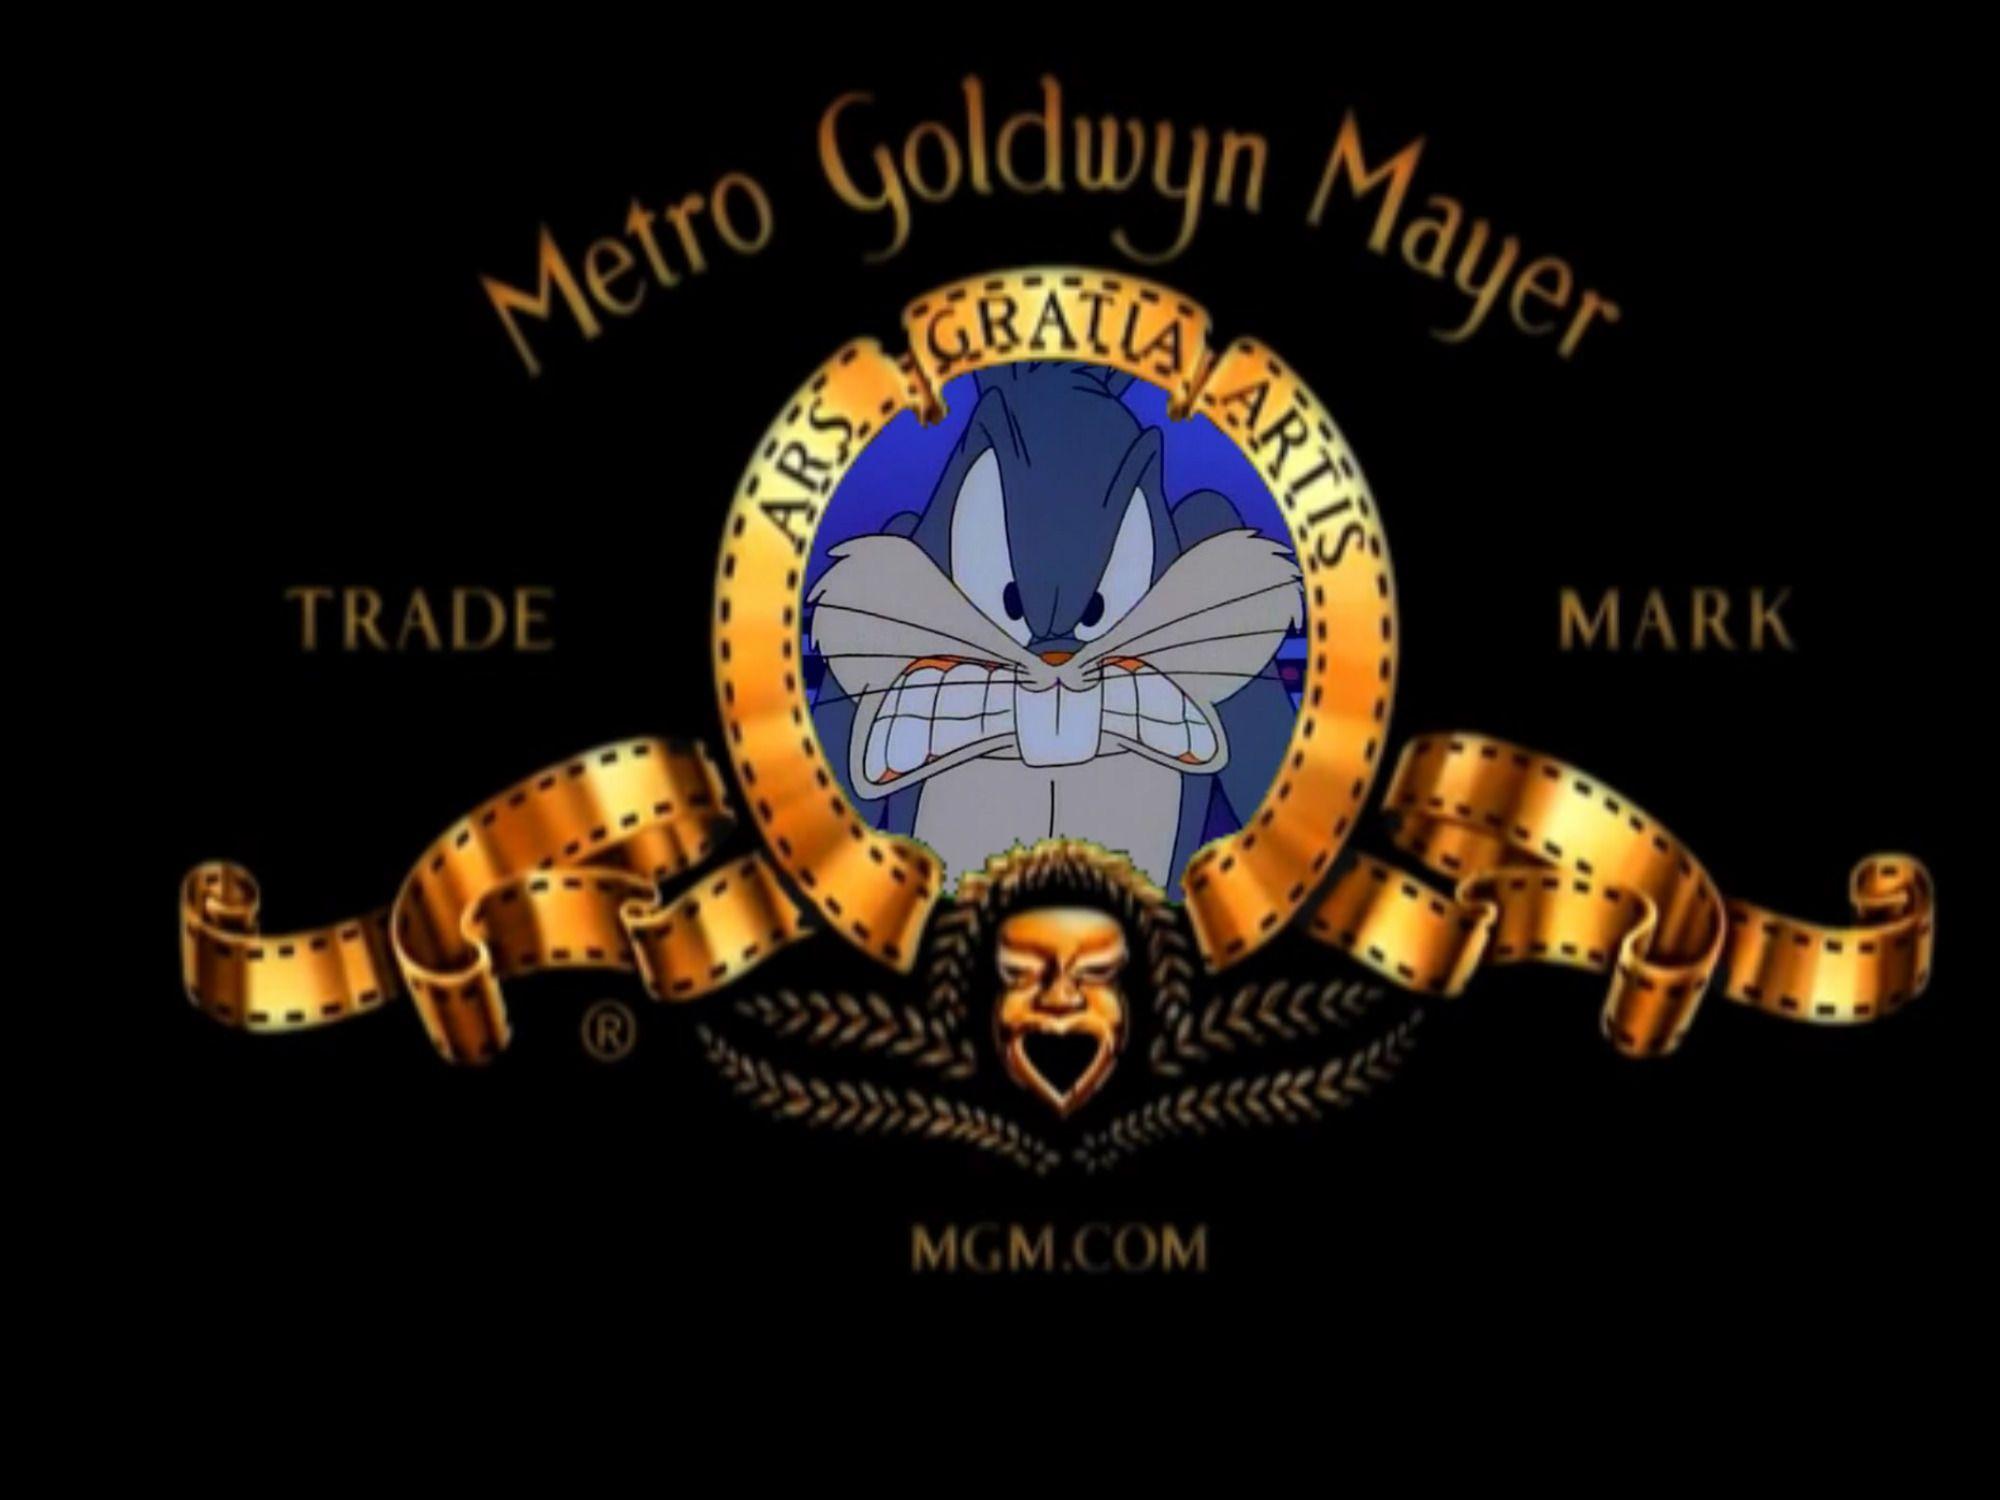 Mgm.com Logo - Bugs Bunny in MGM Logo